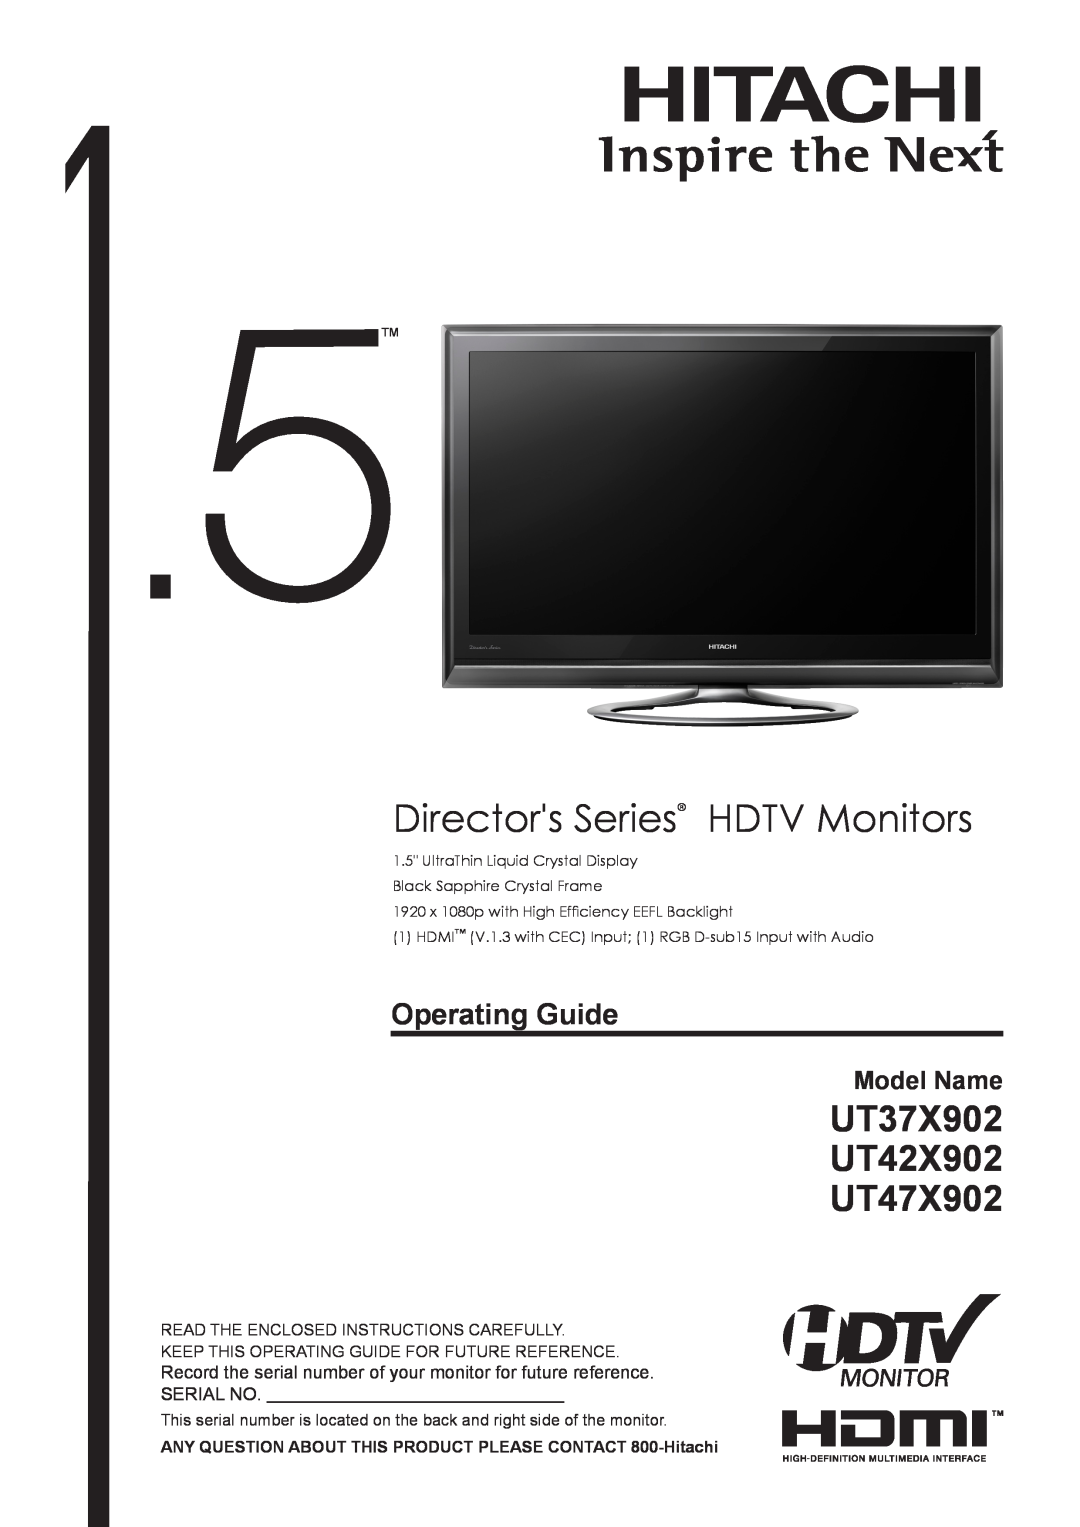 Hitachi manual Directors Series HDTV Monitors, UT37X902 UT42X902 UT47X902, Operating Guide, Model Name 